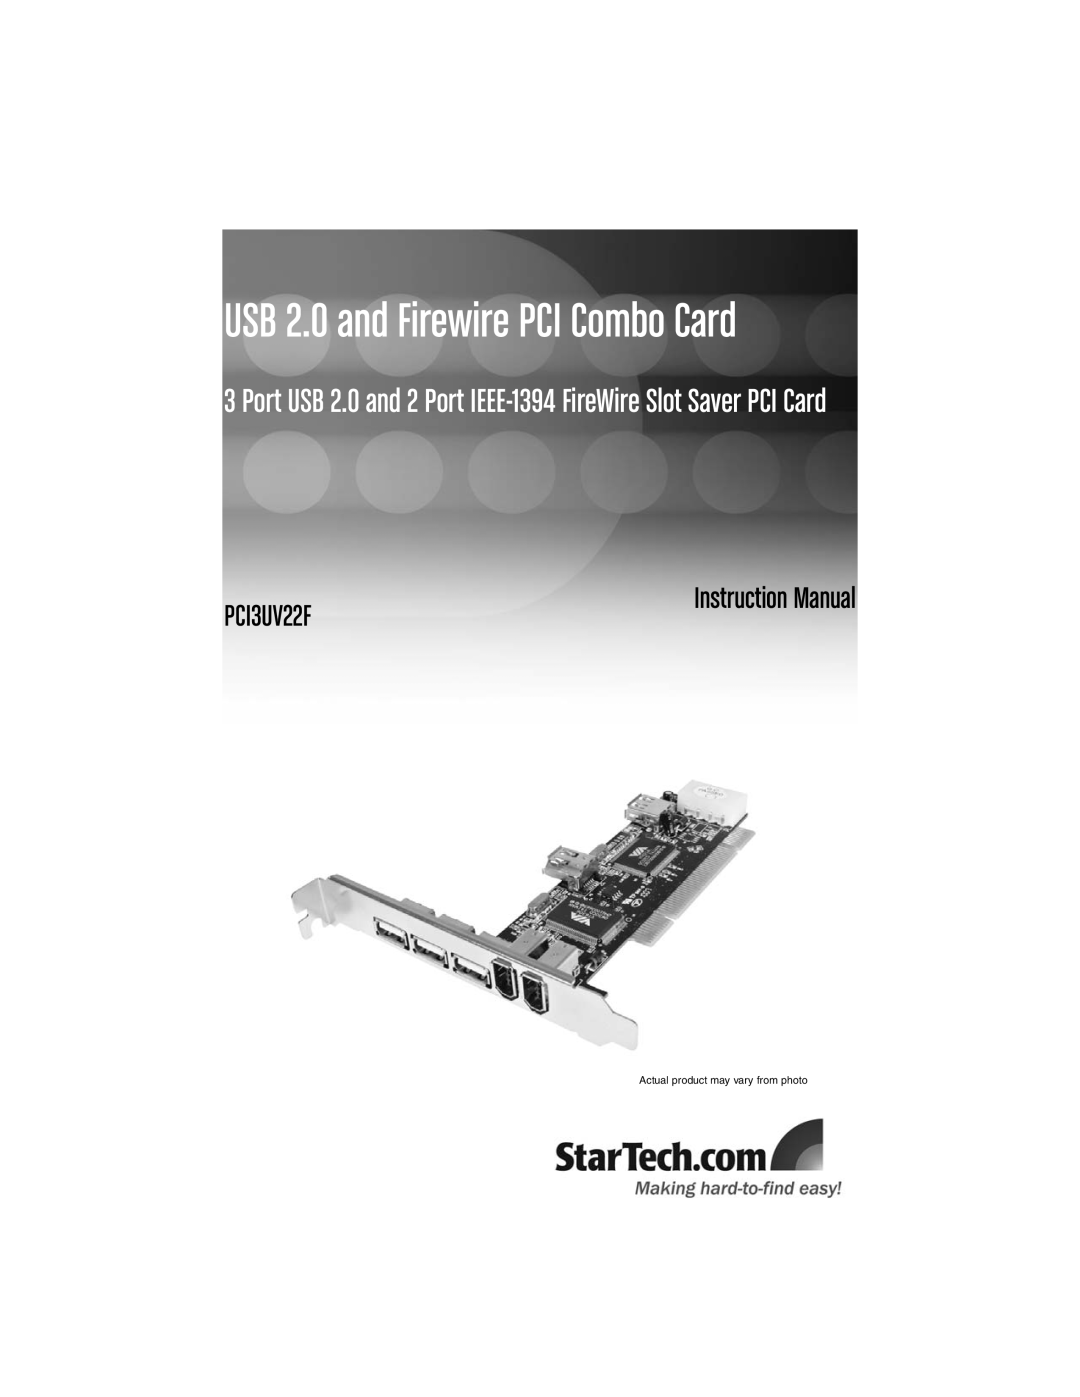 StarTech.com PCI3UV22F instruction manual Instruction Manual, USB 2.0 and Firewire PCI Combo Card 